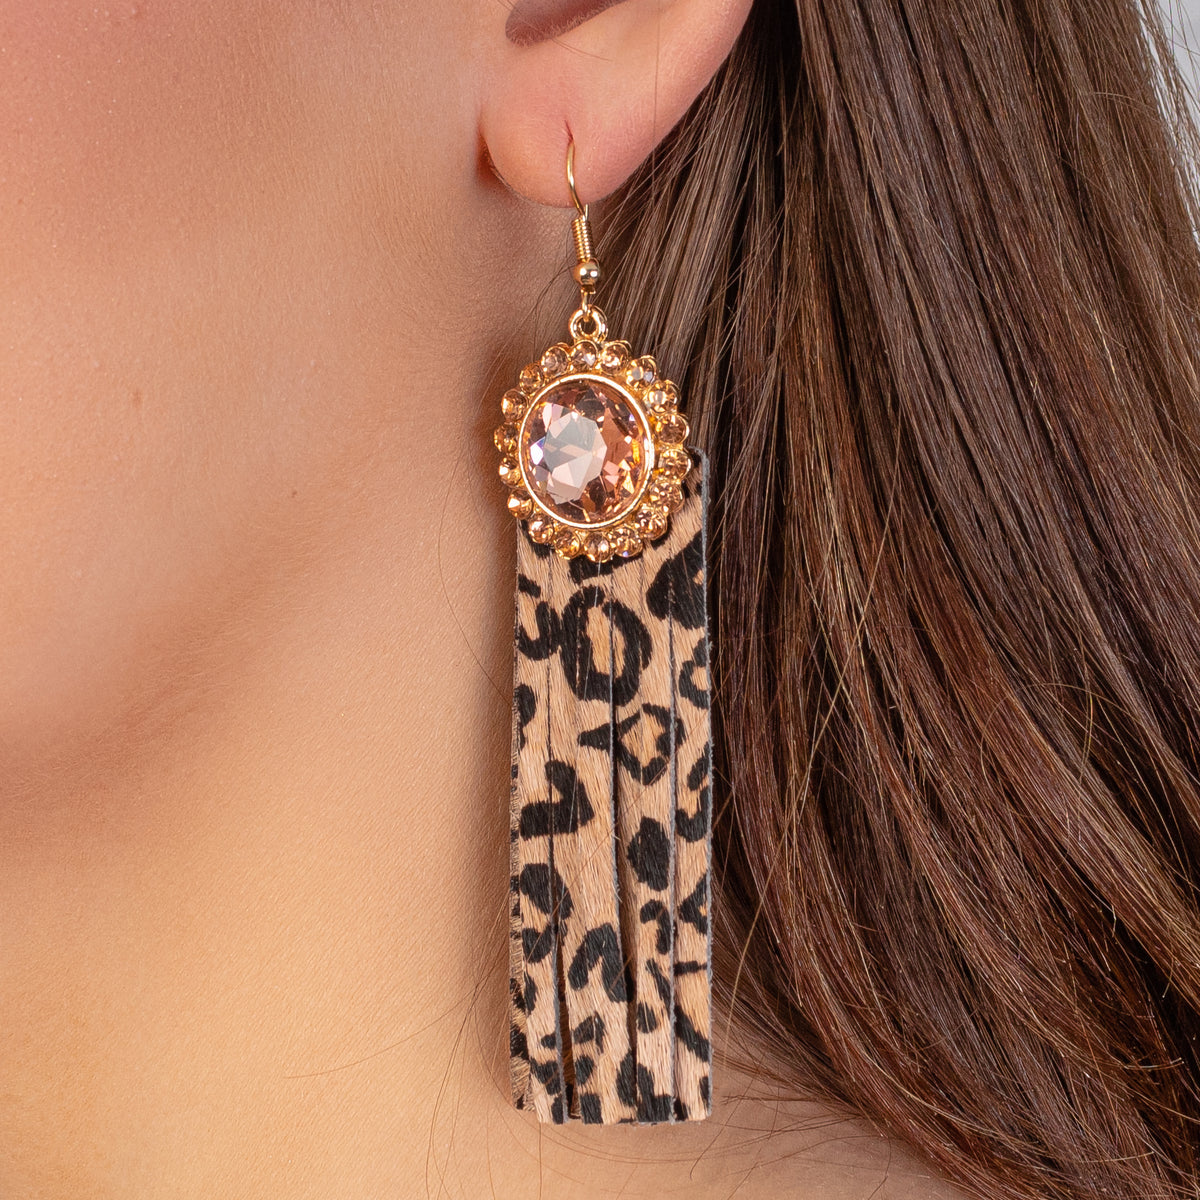 93020 - Rhinestone Tassel Earrings - Rose Gold - Fashion Jewelry Wholesale